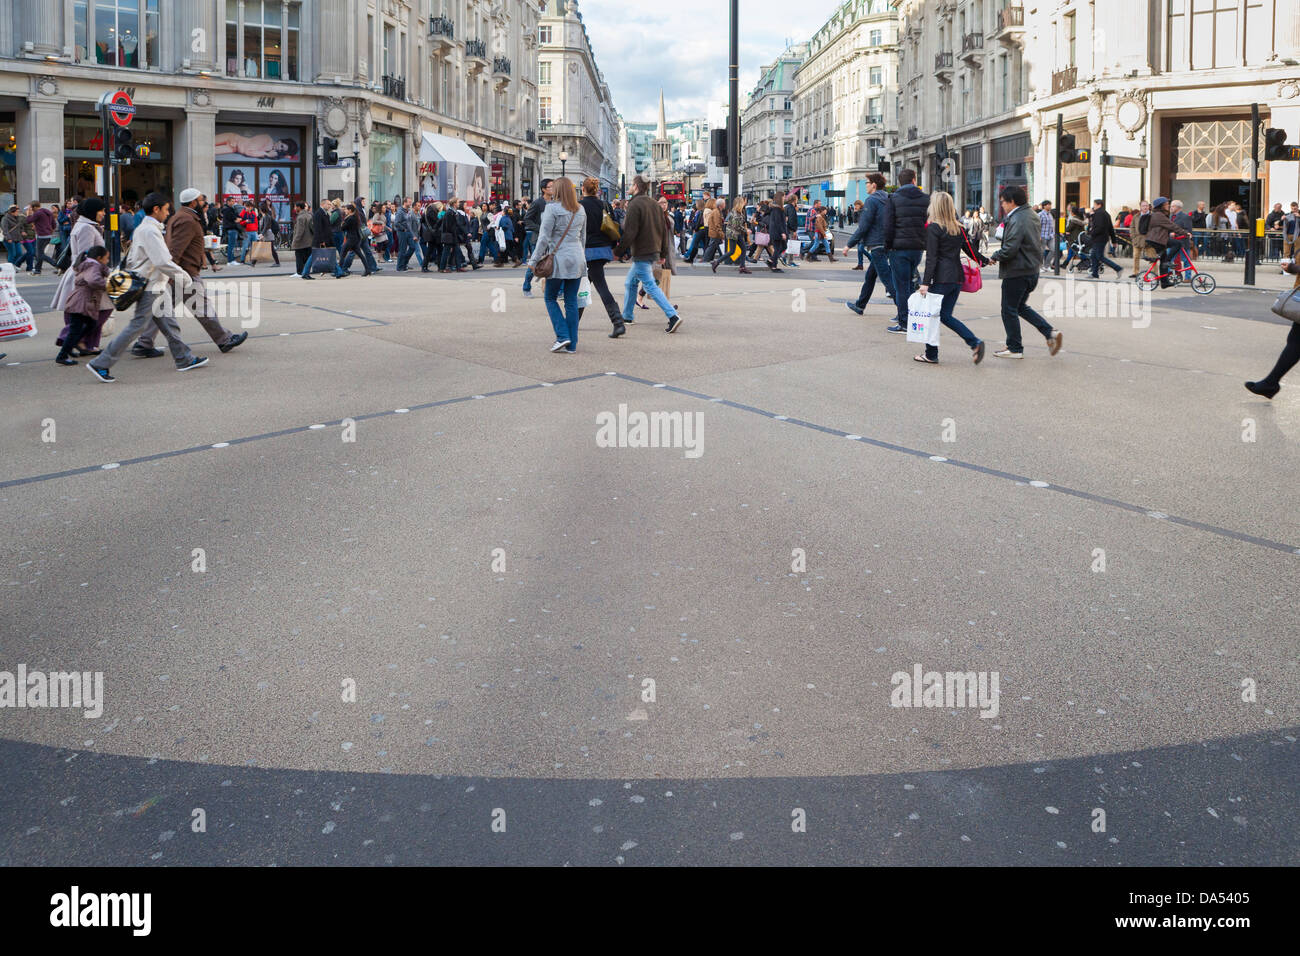 Cruce peatonal diagonal en Oxford Circus, Londres, Reino Unido Foto de stock